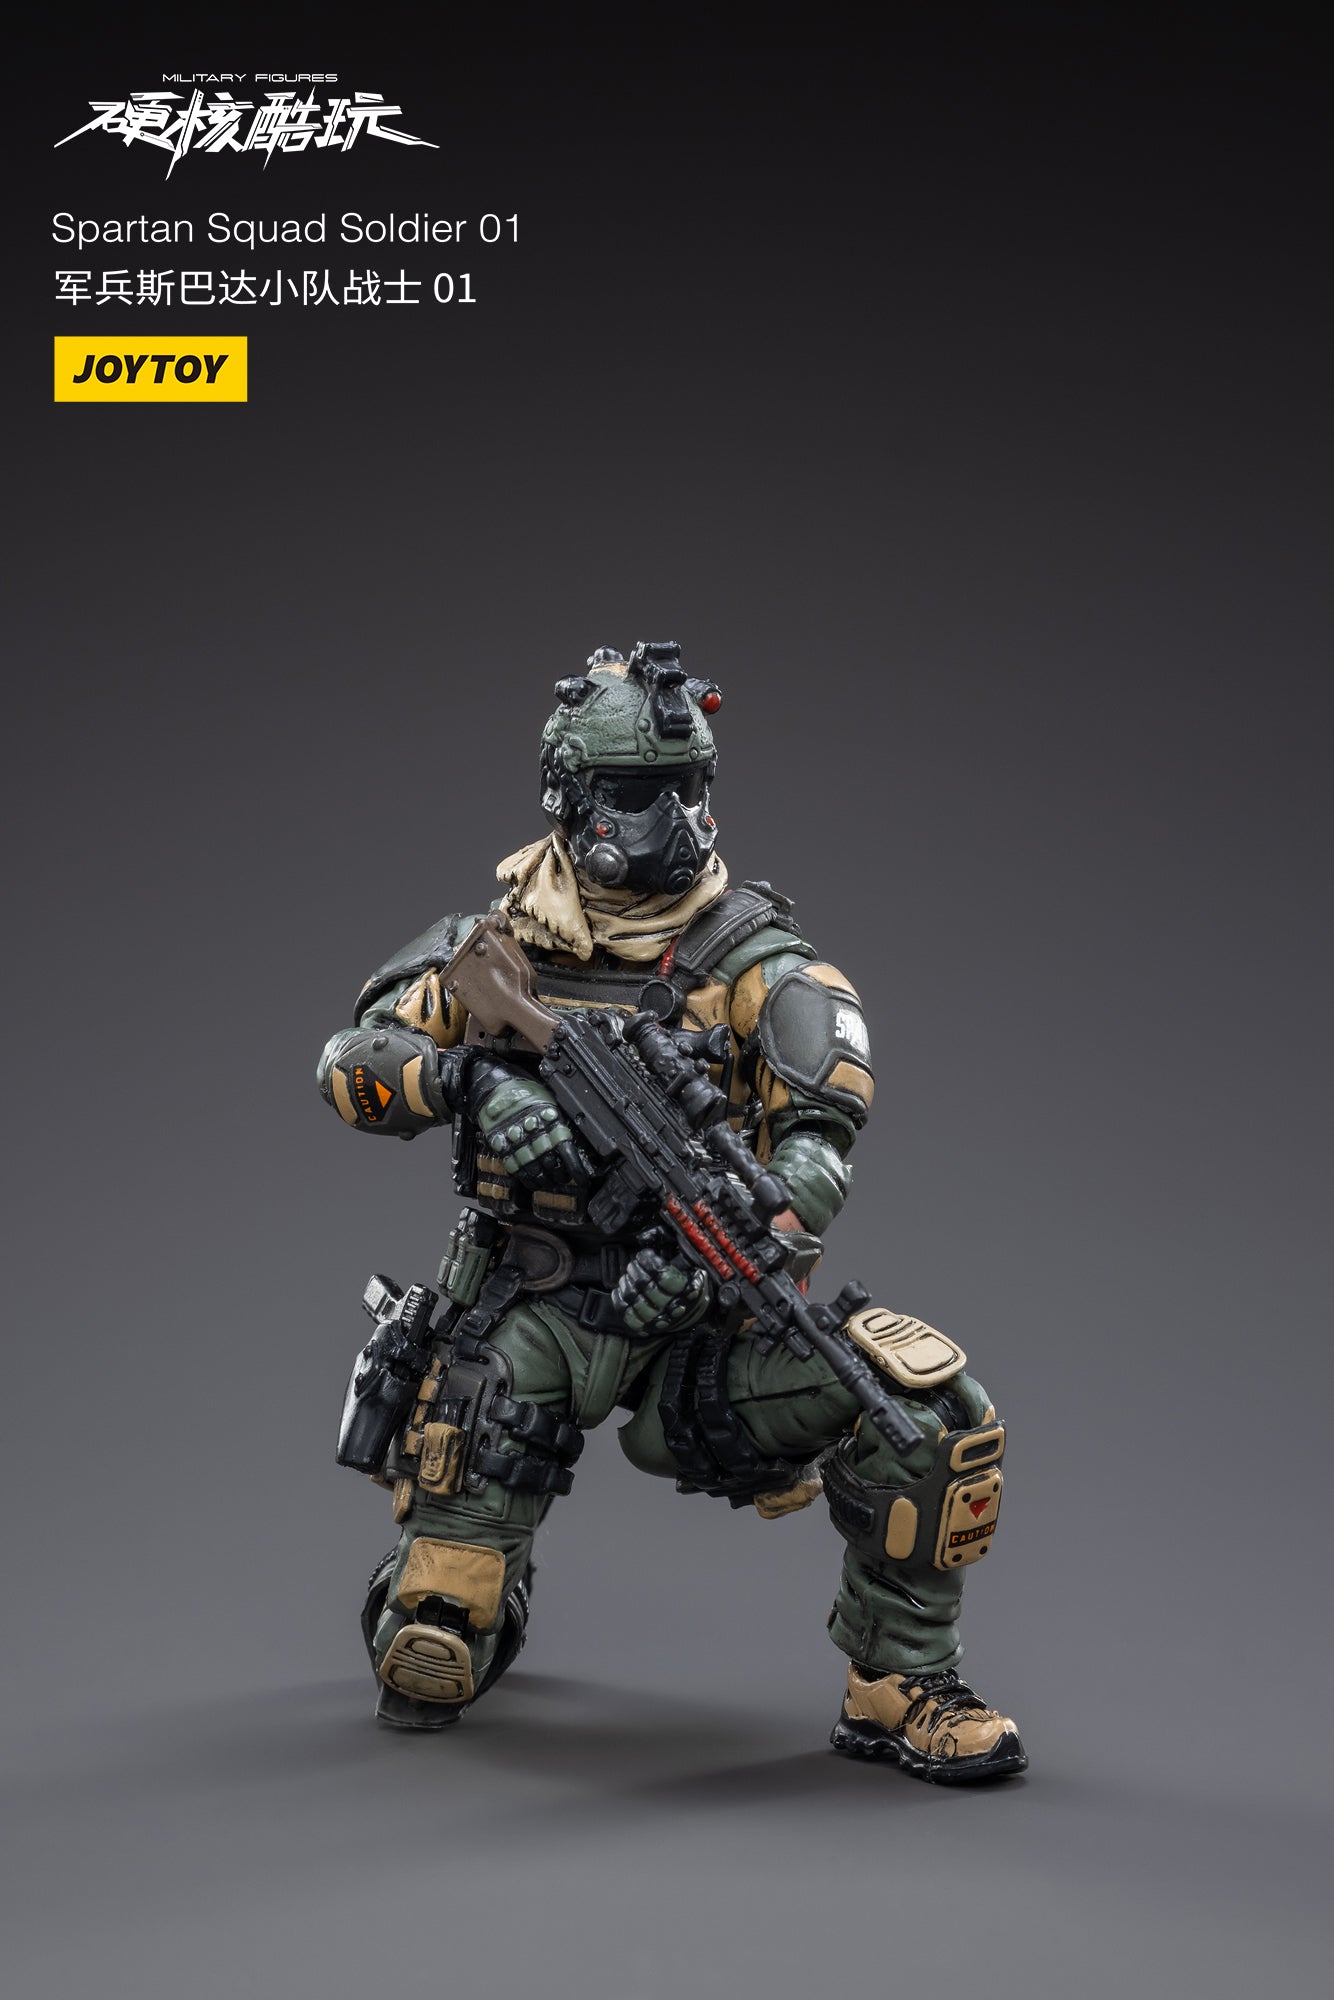 Spartan Squad Soldier 01